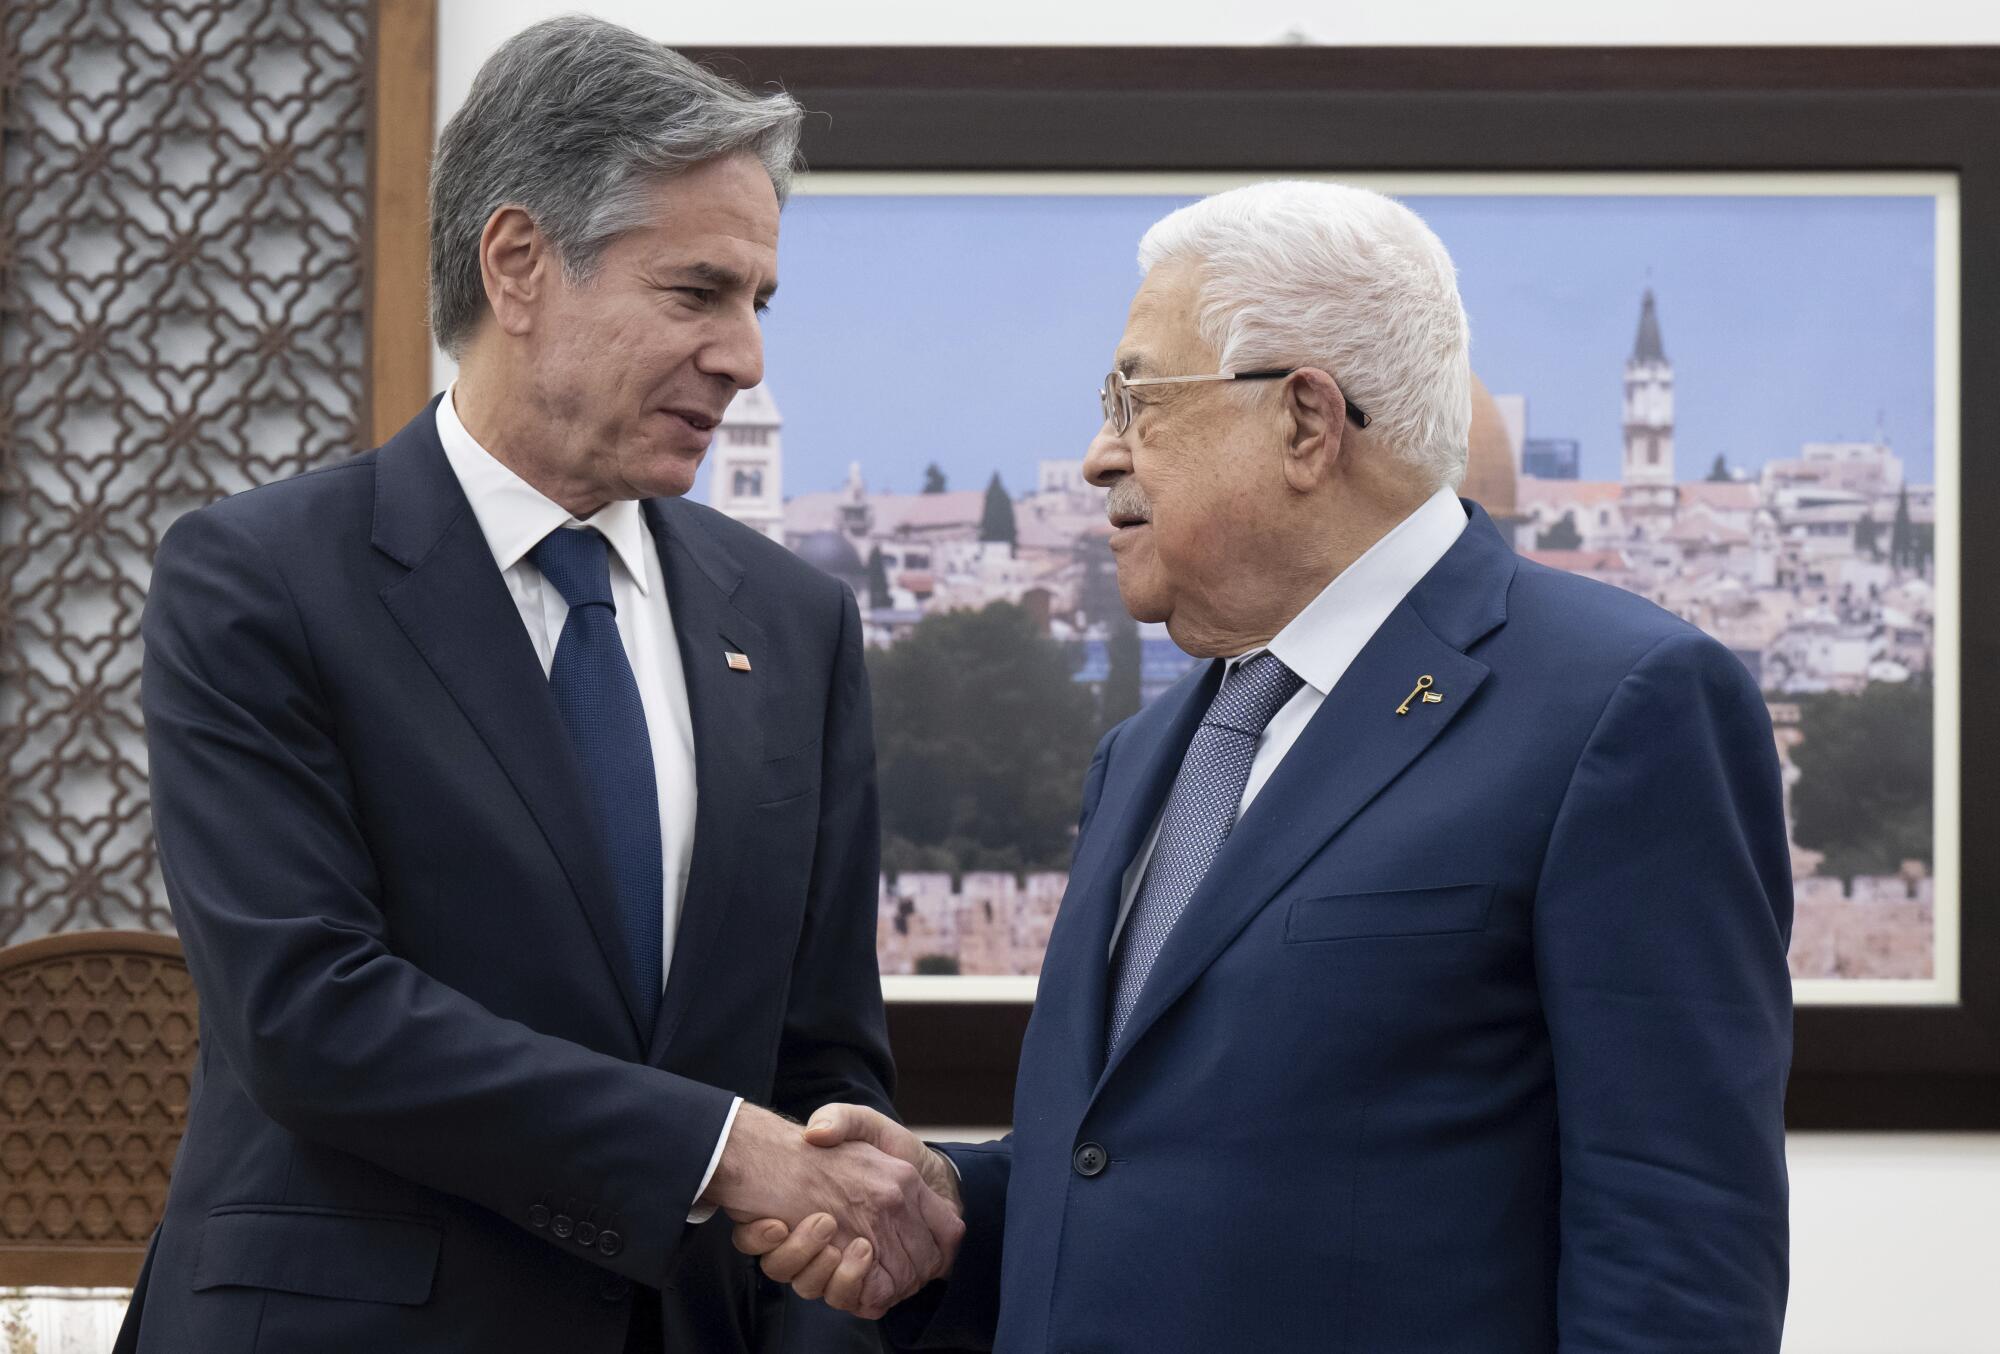 Secretary of State Antony Blinken shaking hands with Palestinian Authority President Mahmoud Abbas